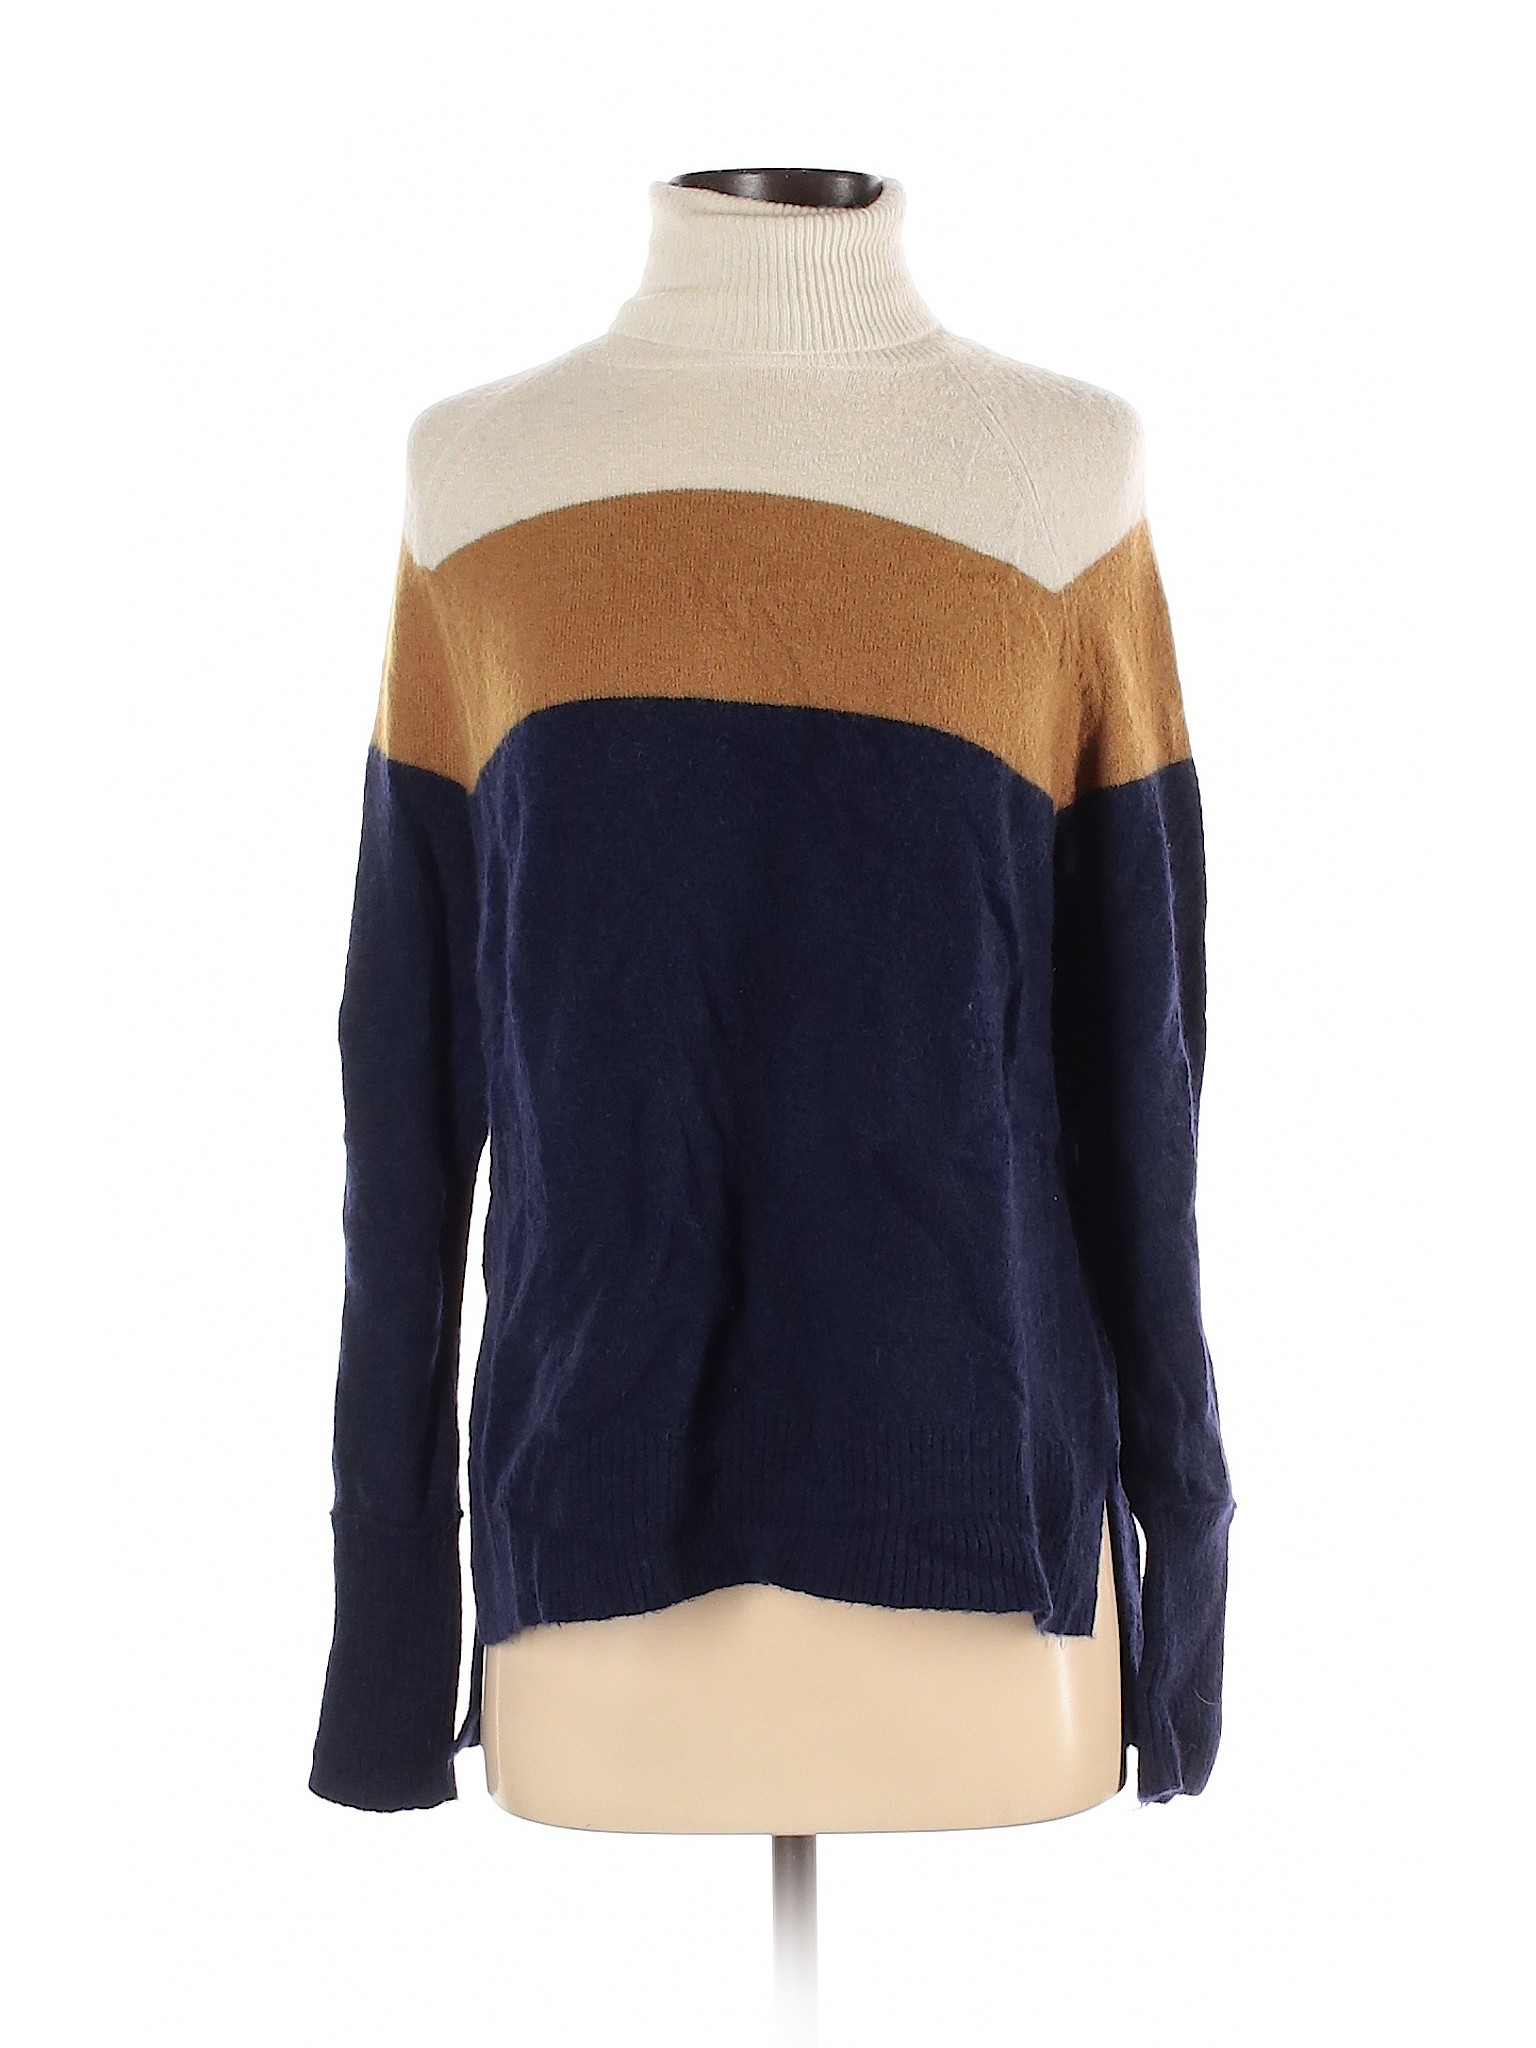 J.Crew Women Blue Pullover Sweater S | eBay